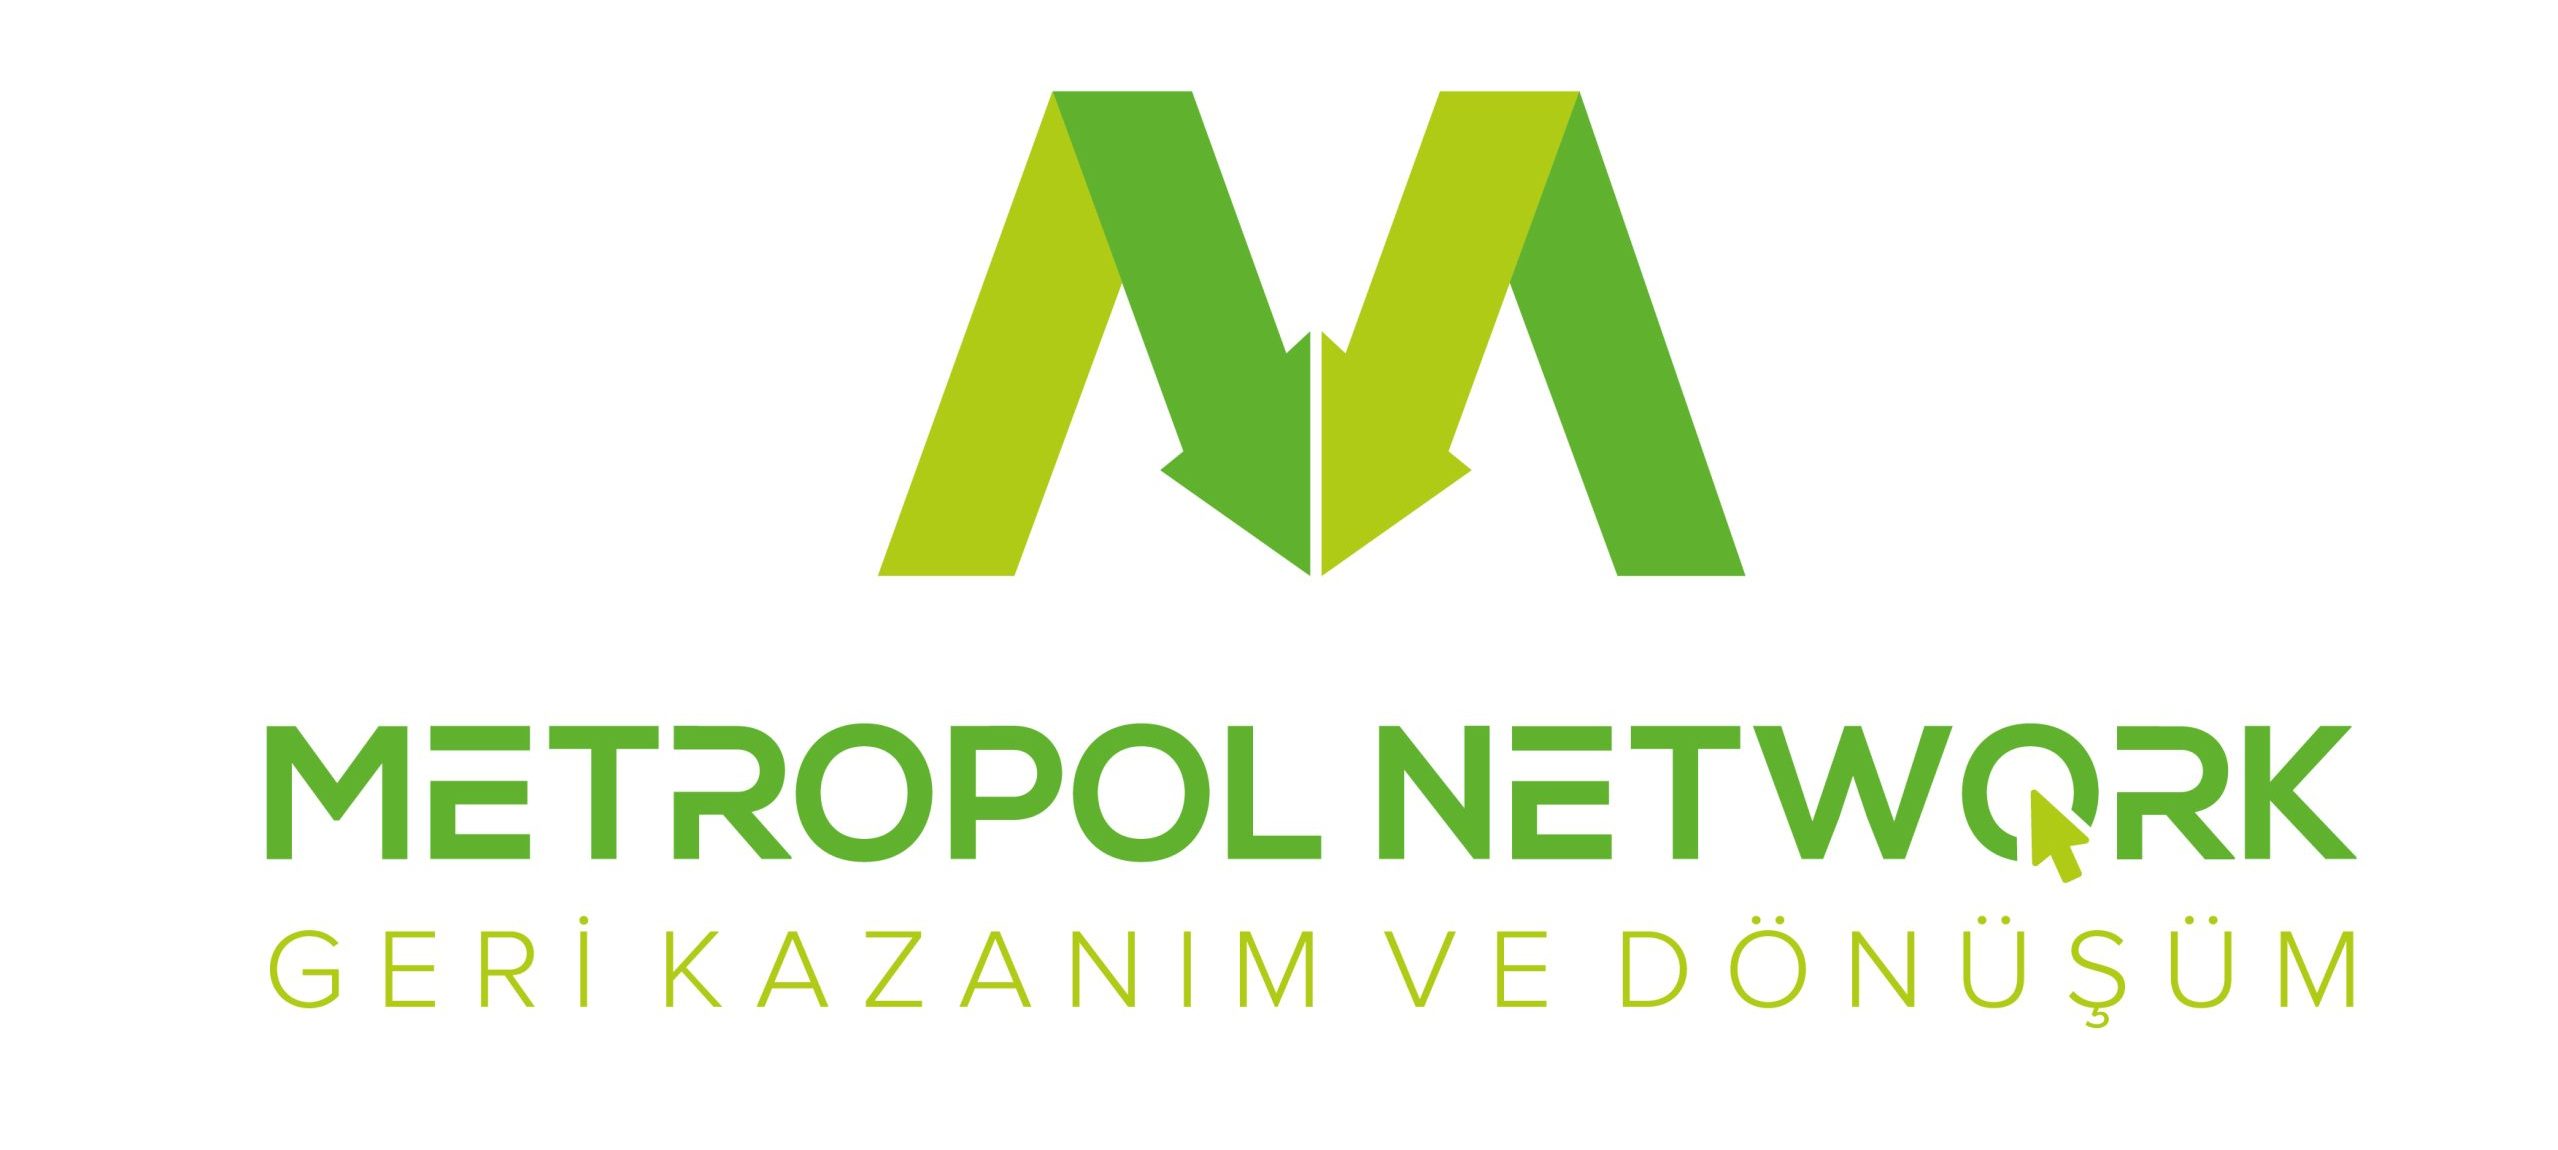 Metropol Network